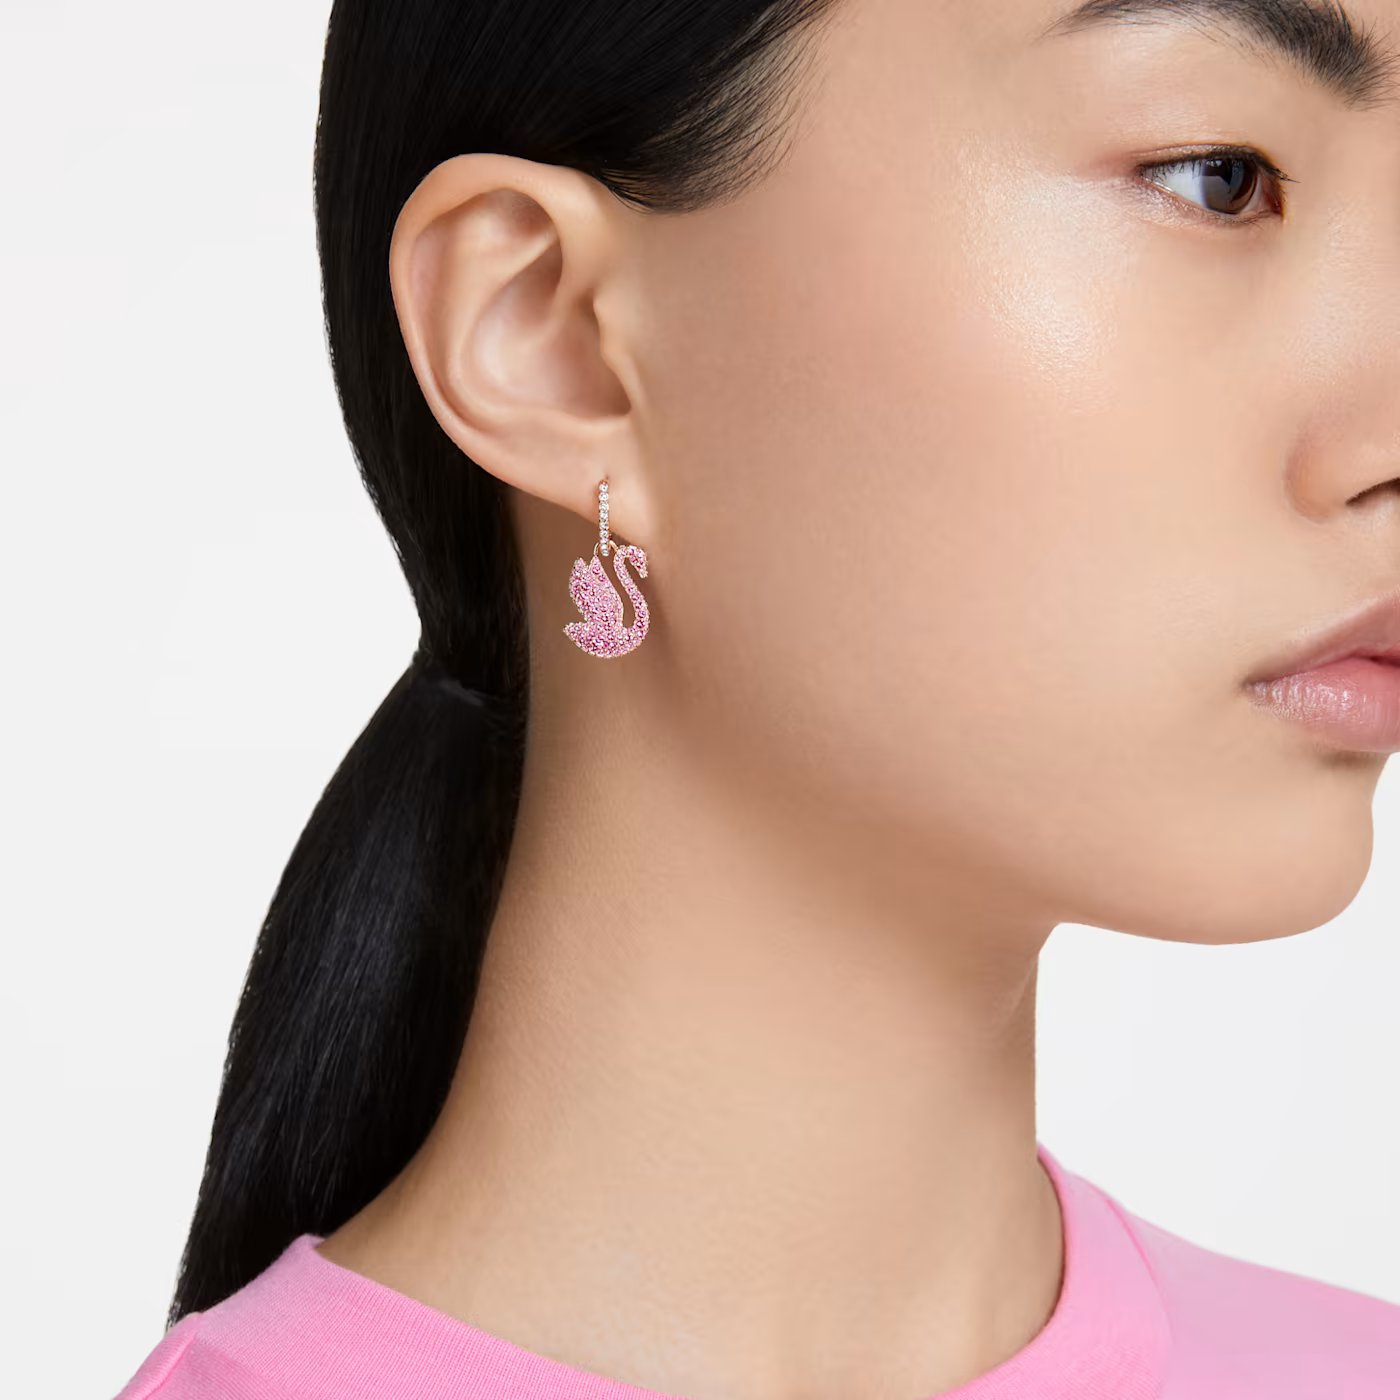 Buy Swarovski Iconic Swan Pierced Earring Jackets, Black, Rose Gold Plating